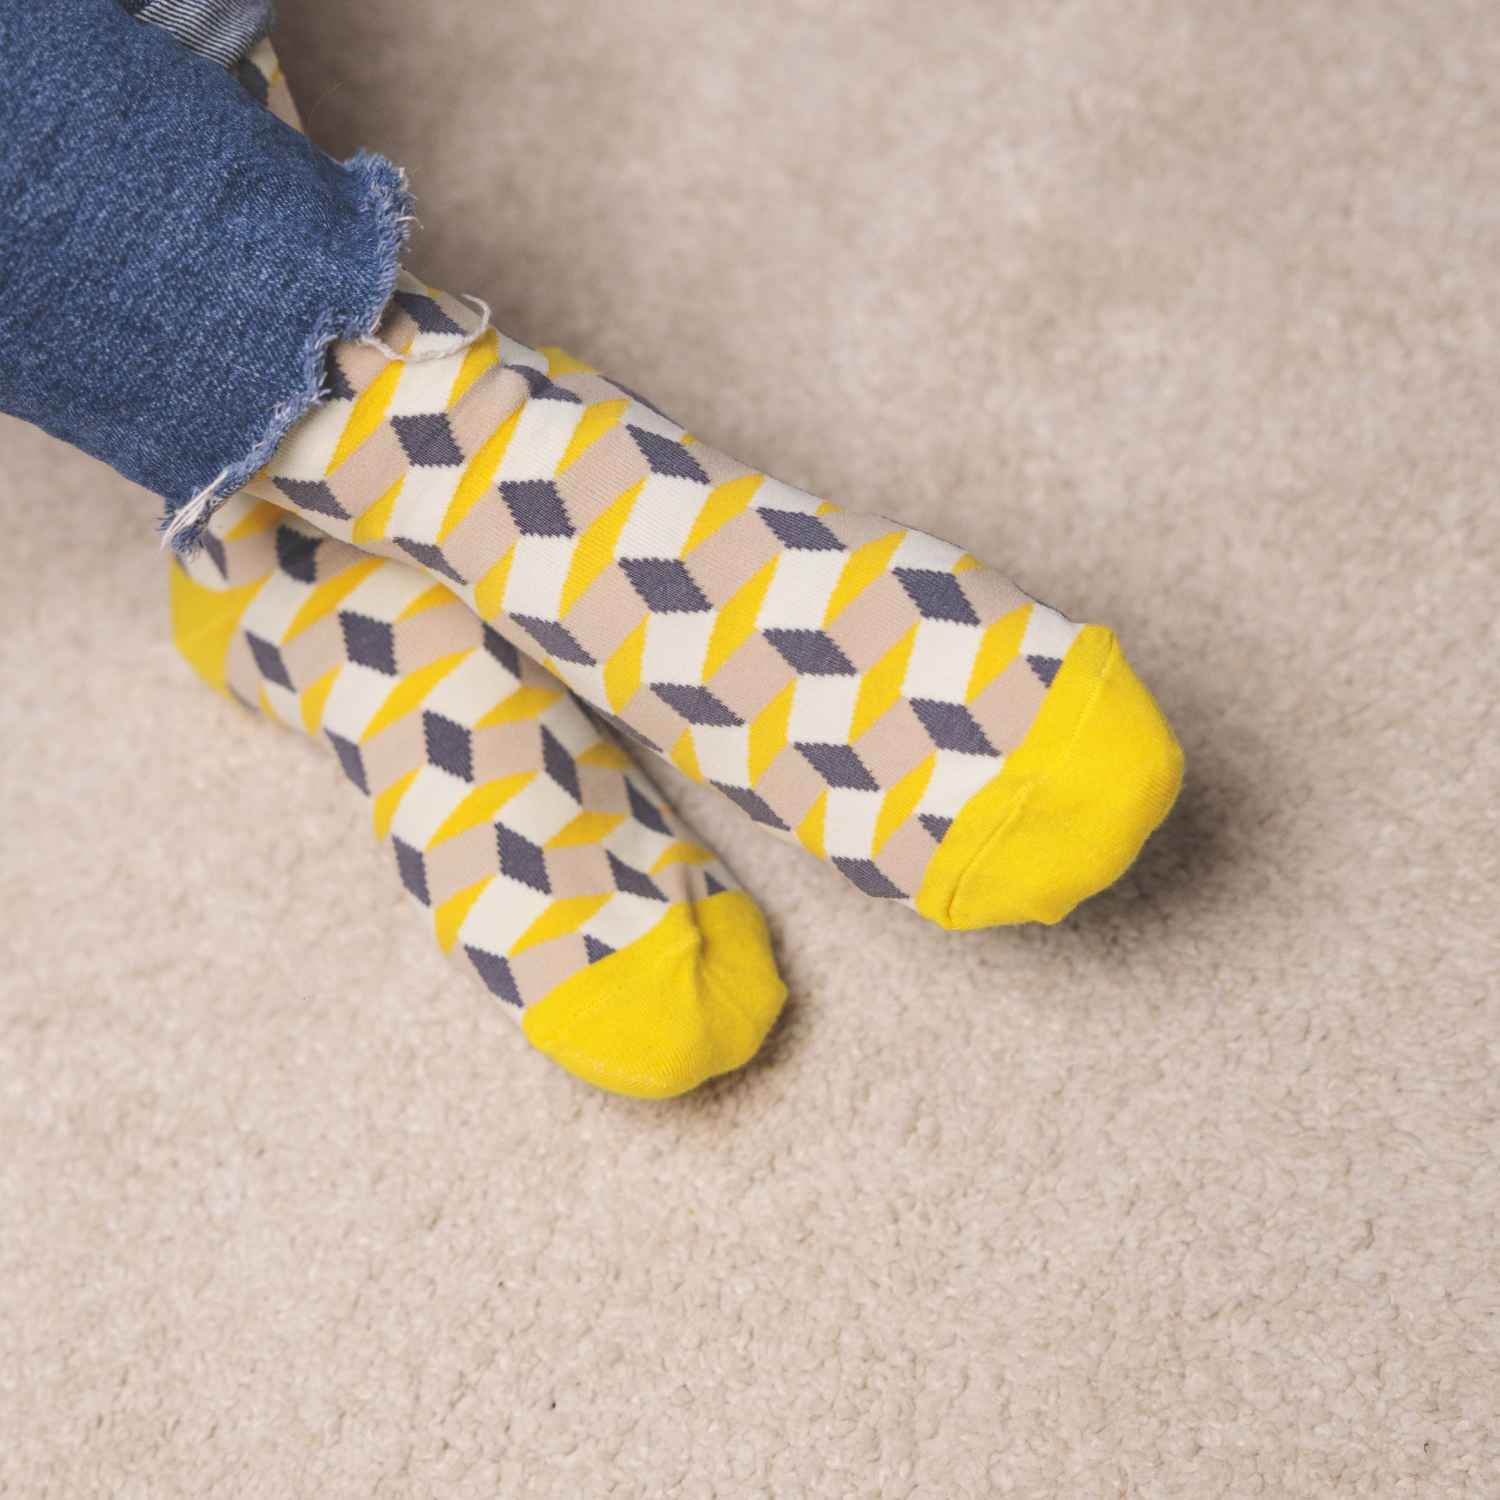 Жълти чорапи на фигурки